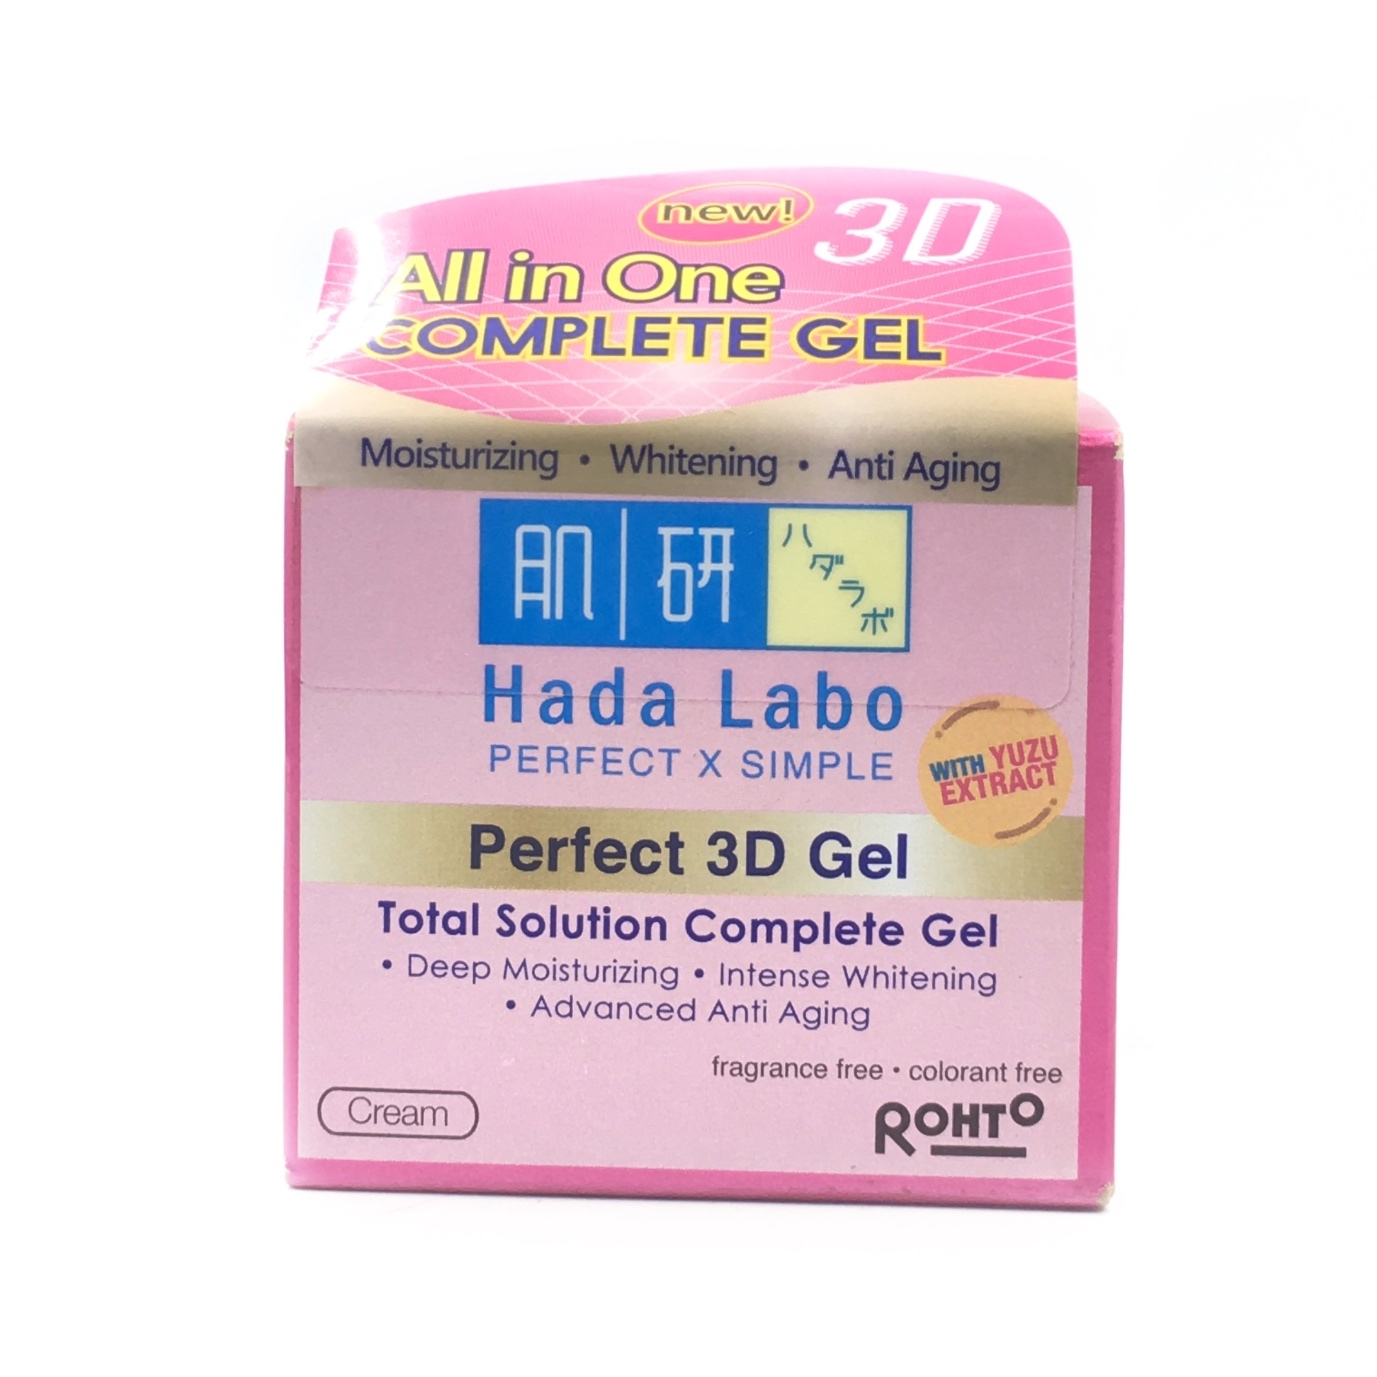 Hada Labo Perfect 3D Gek Skin Care